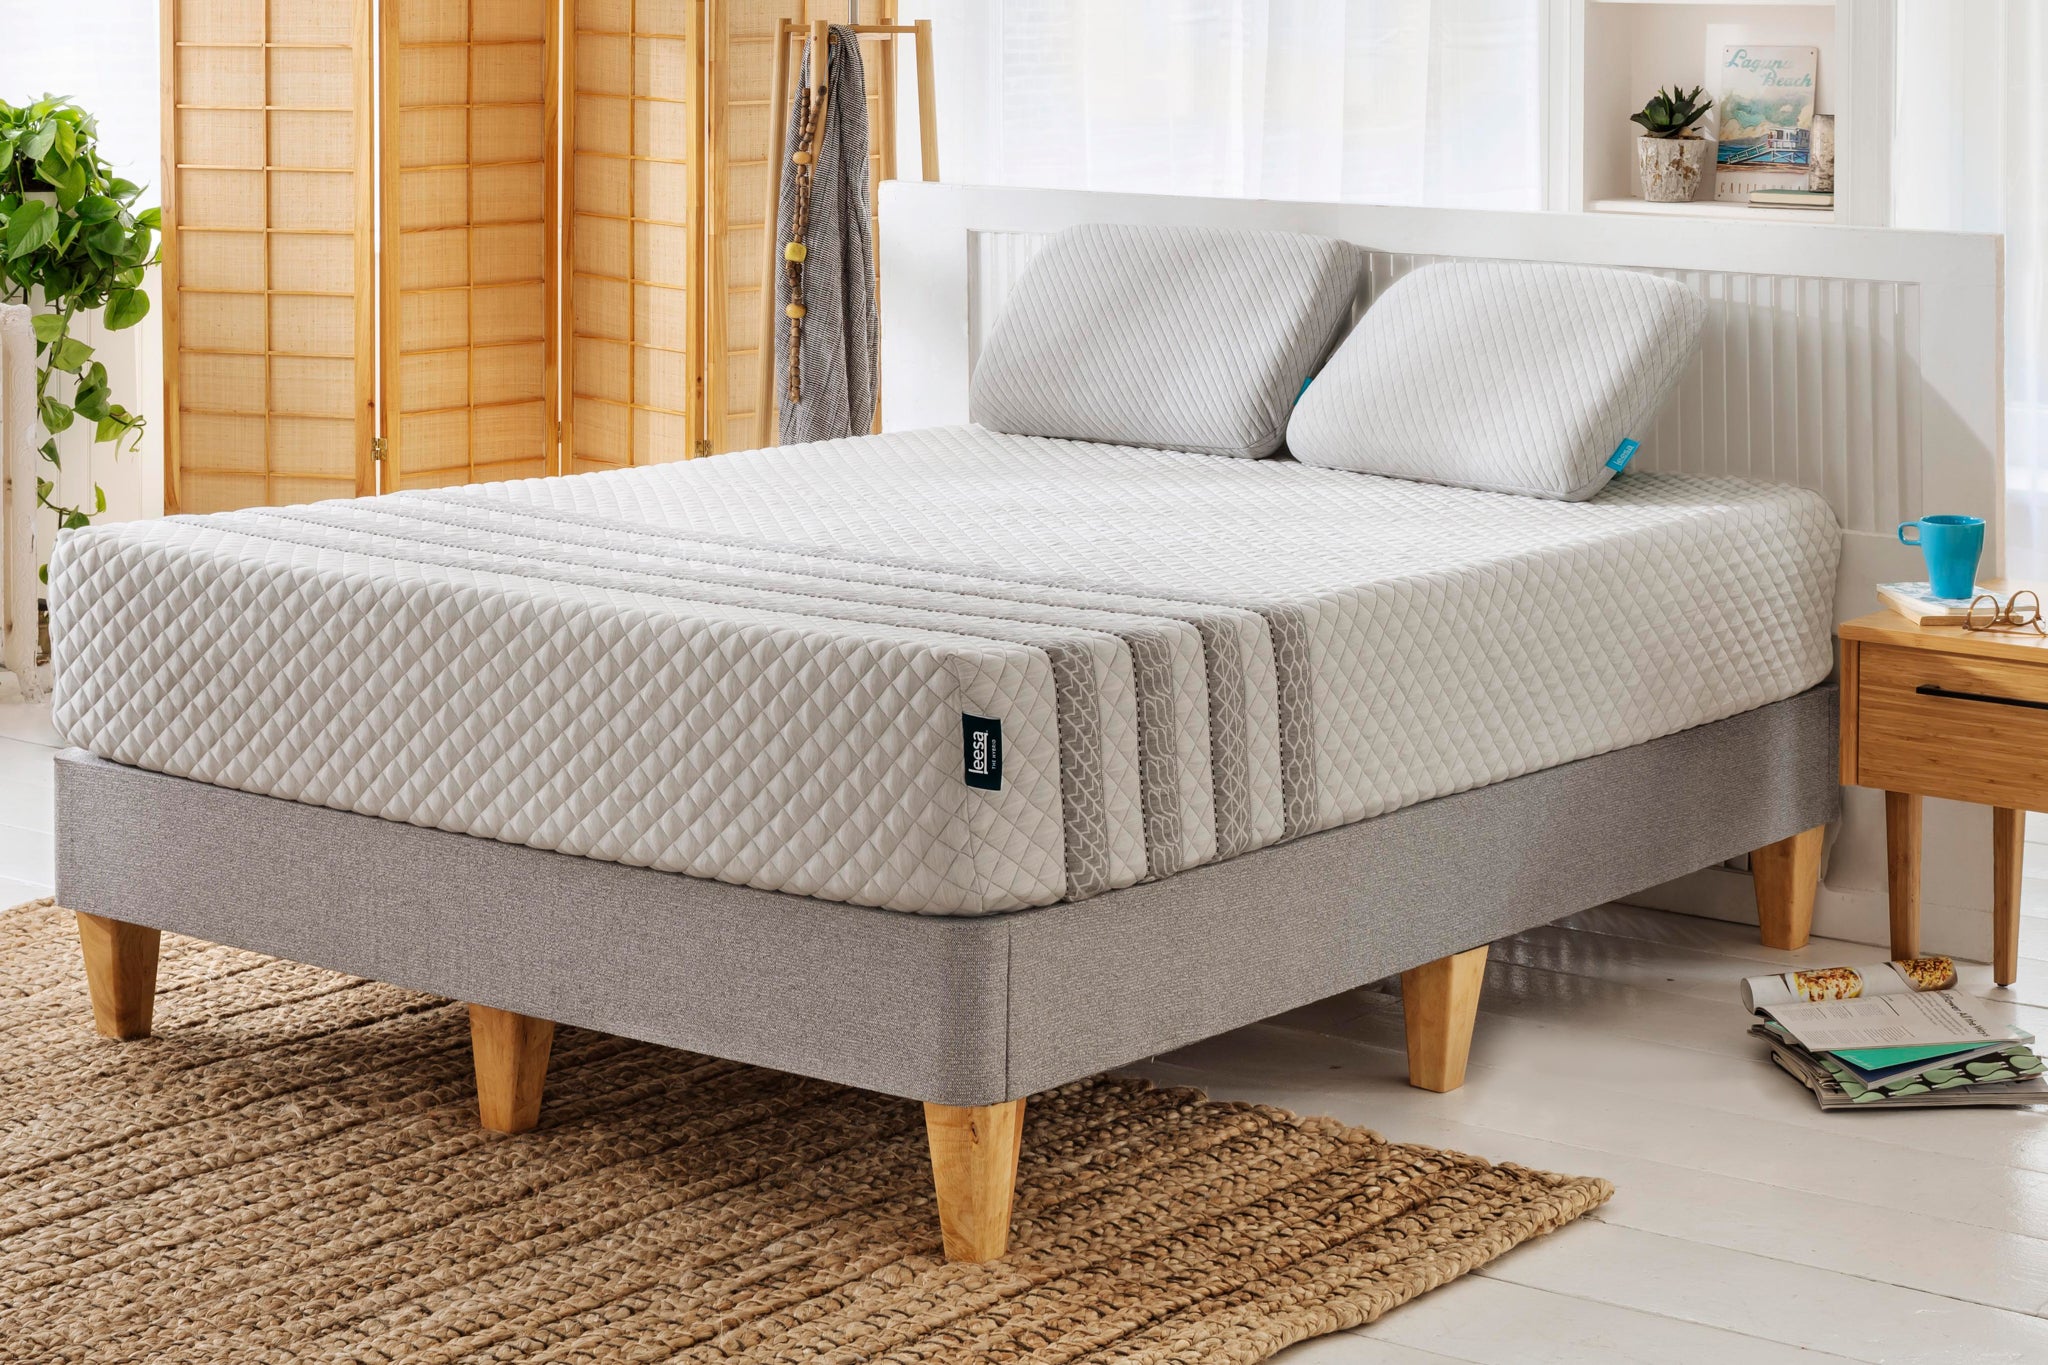 What is a hybrid mattress